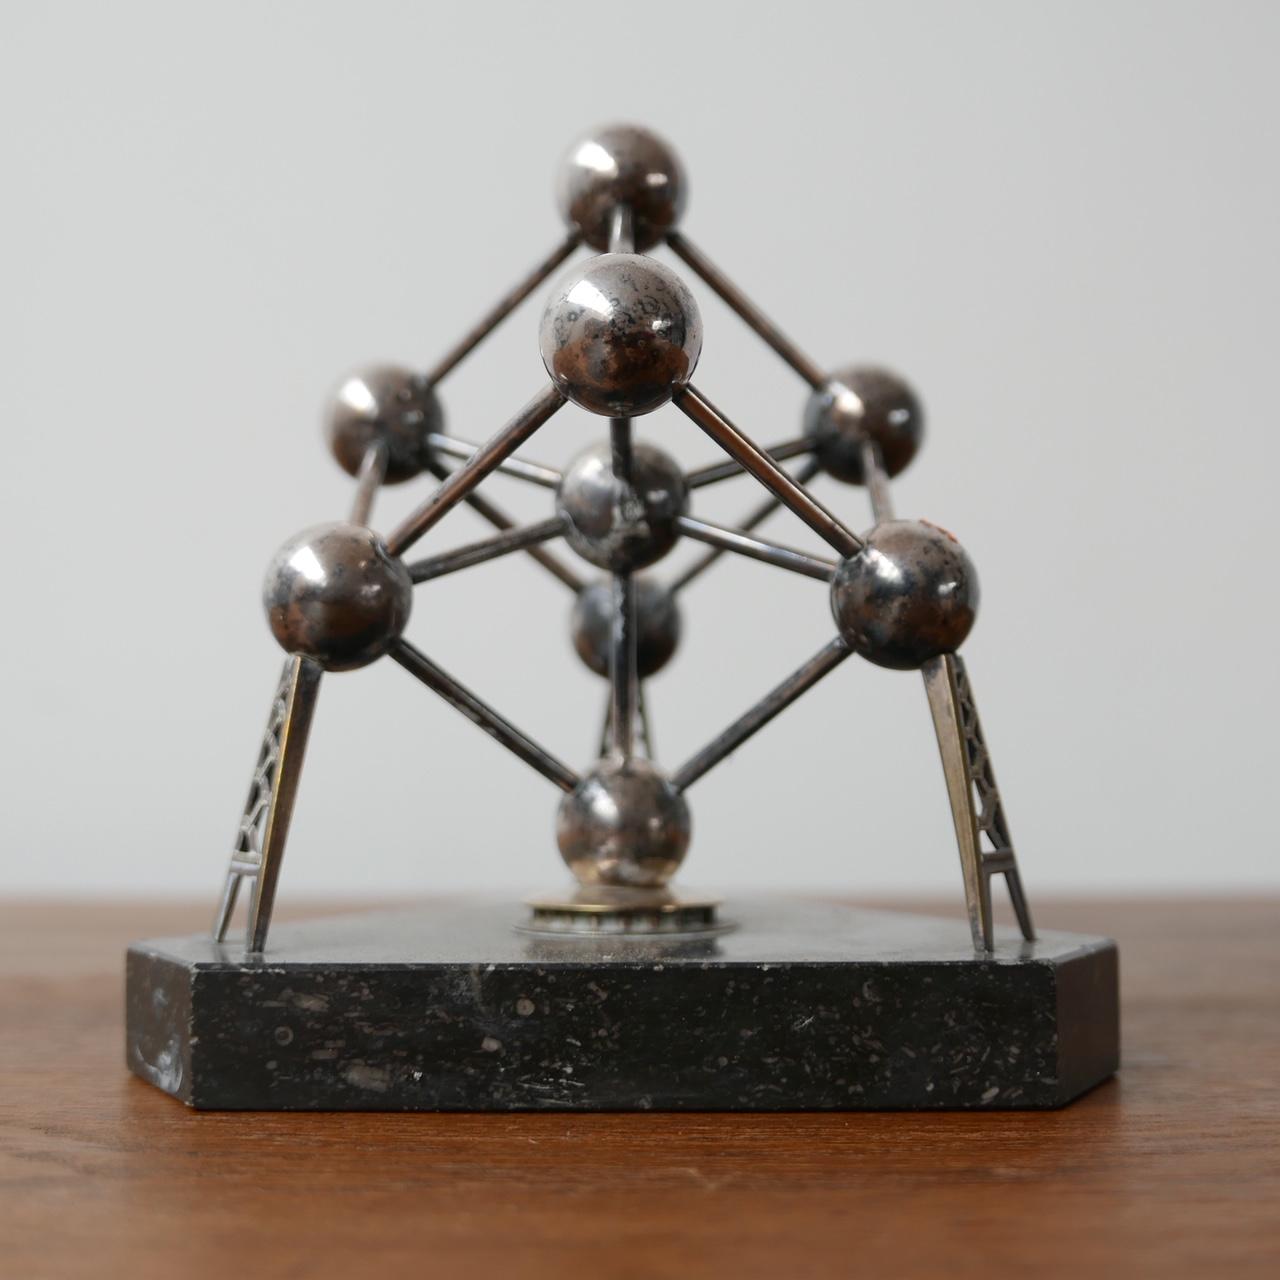 Metal Mid-Century Desk Model of the 'Atomium' Building